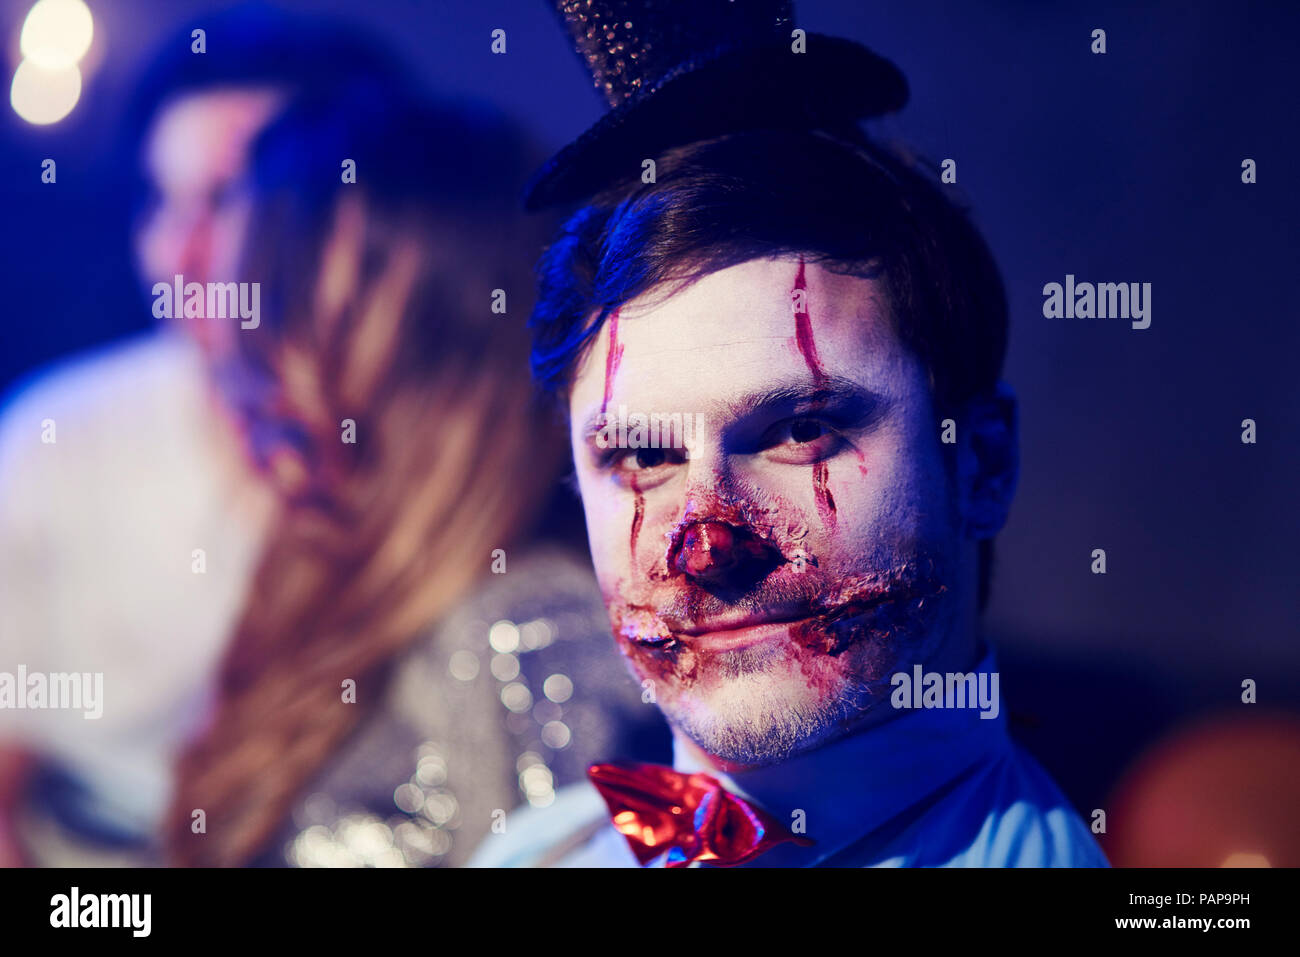 Portrait of man in creepy Halloween costume Stock Photo